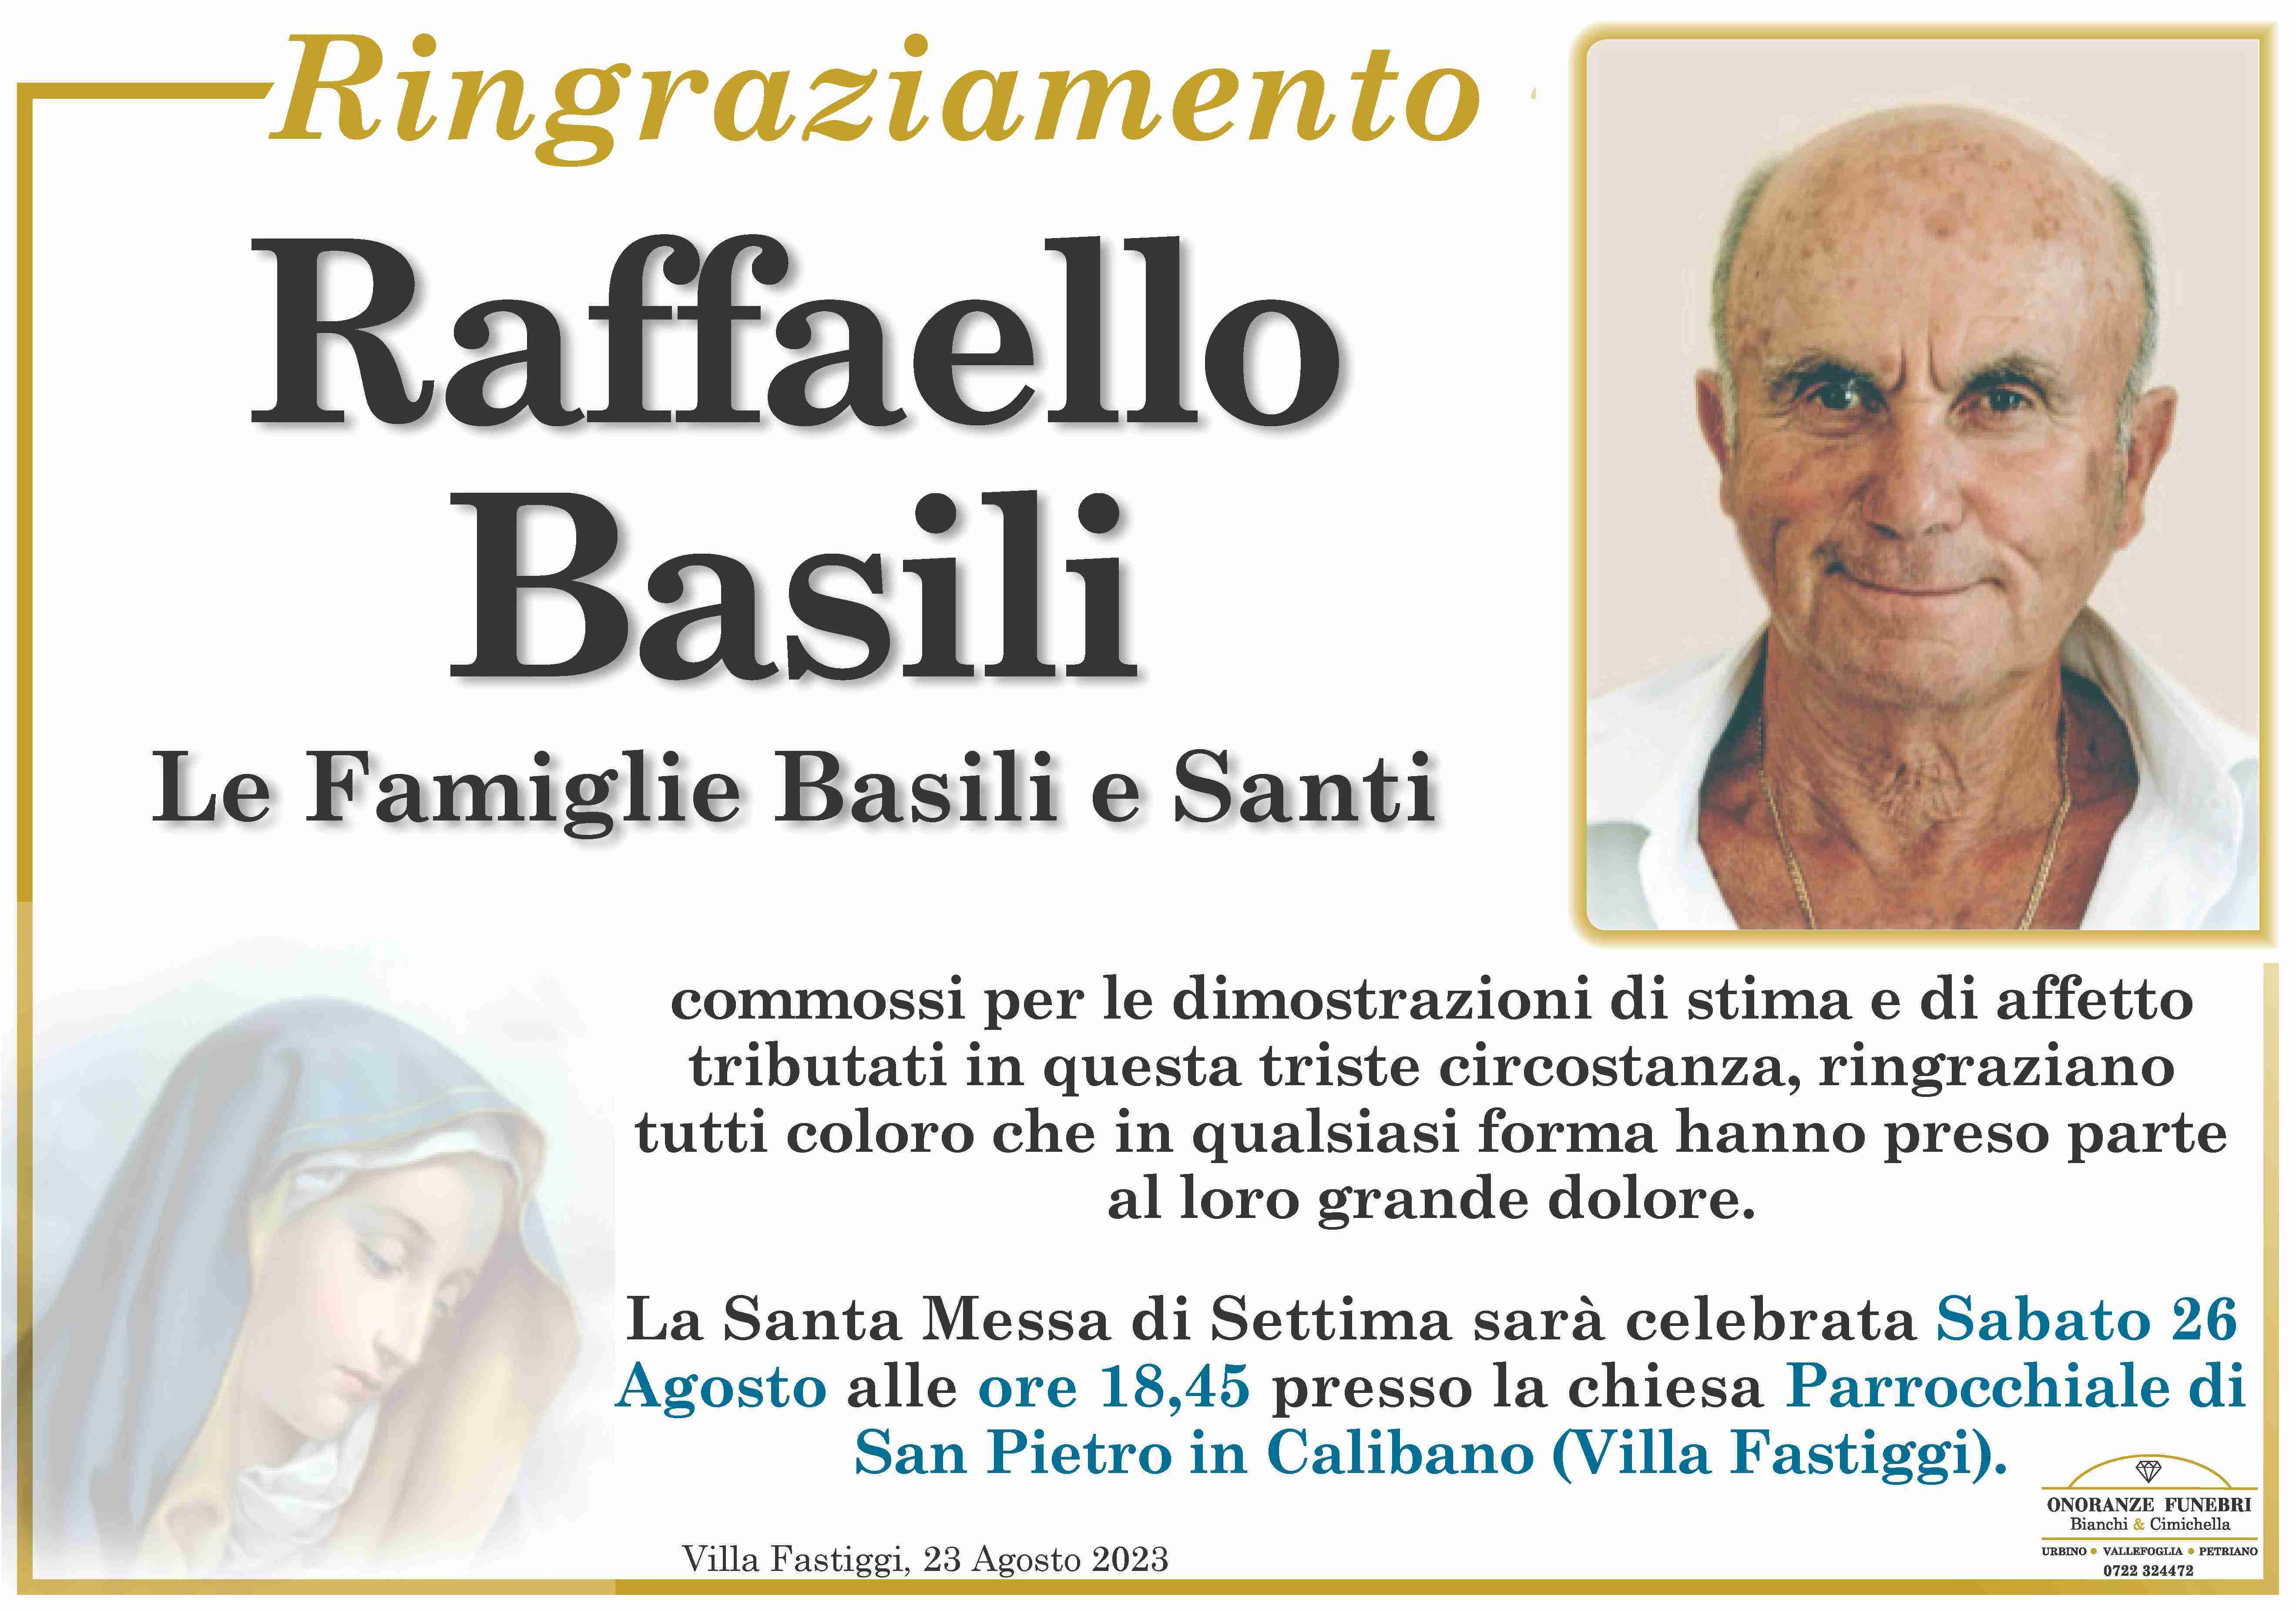 Raffaello Basili